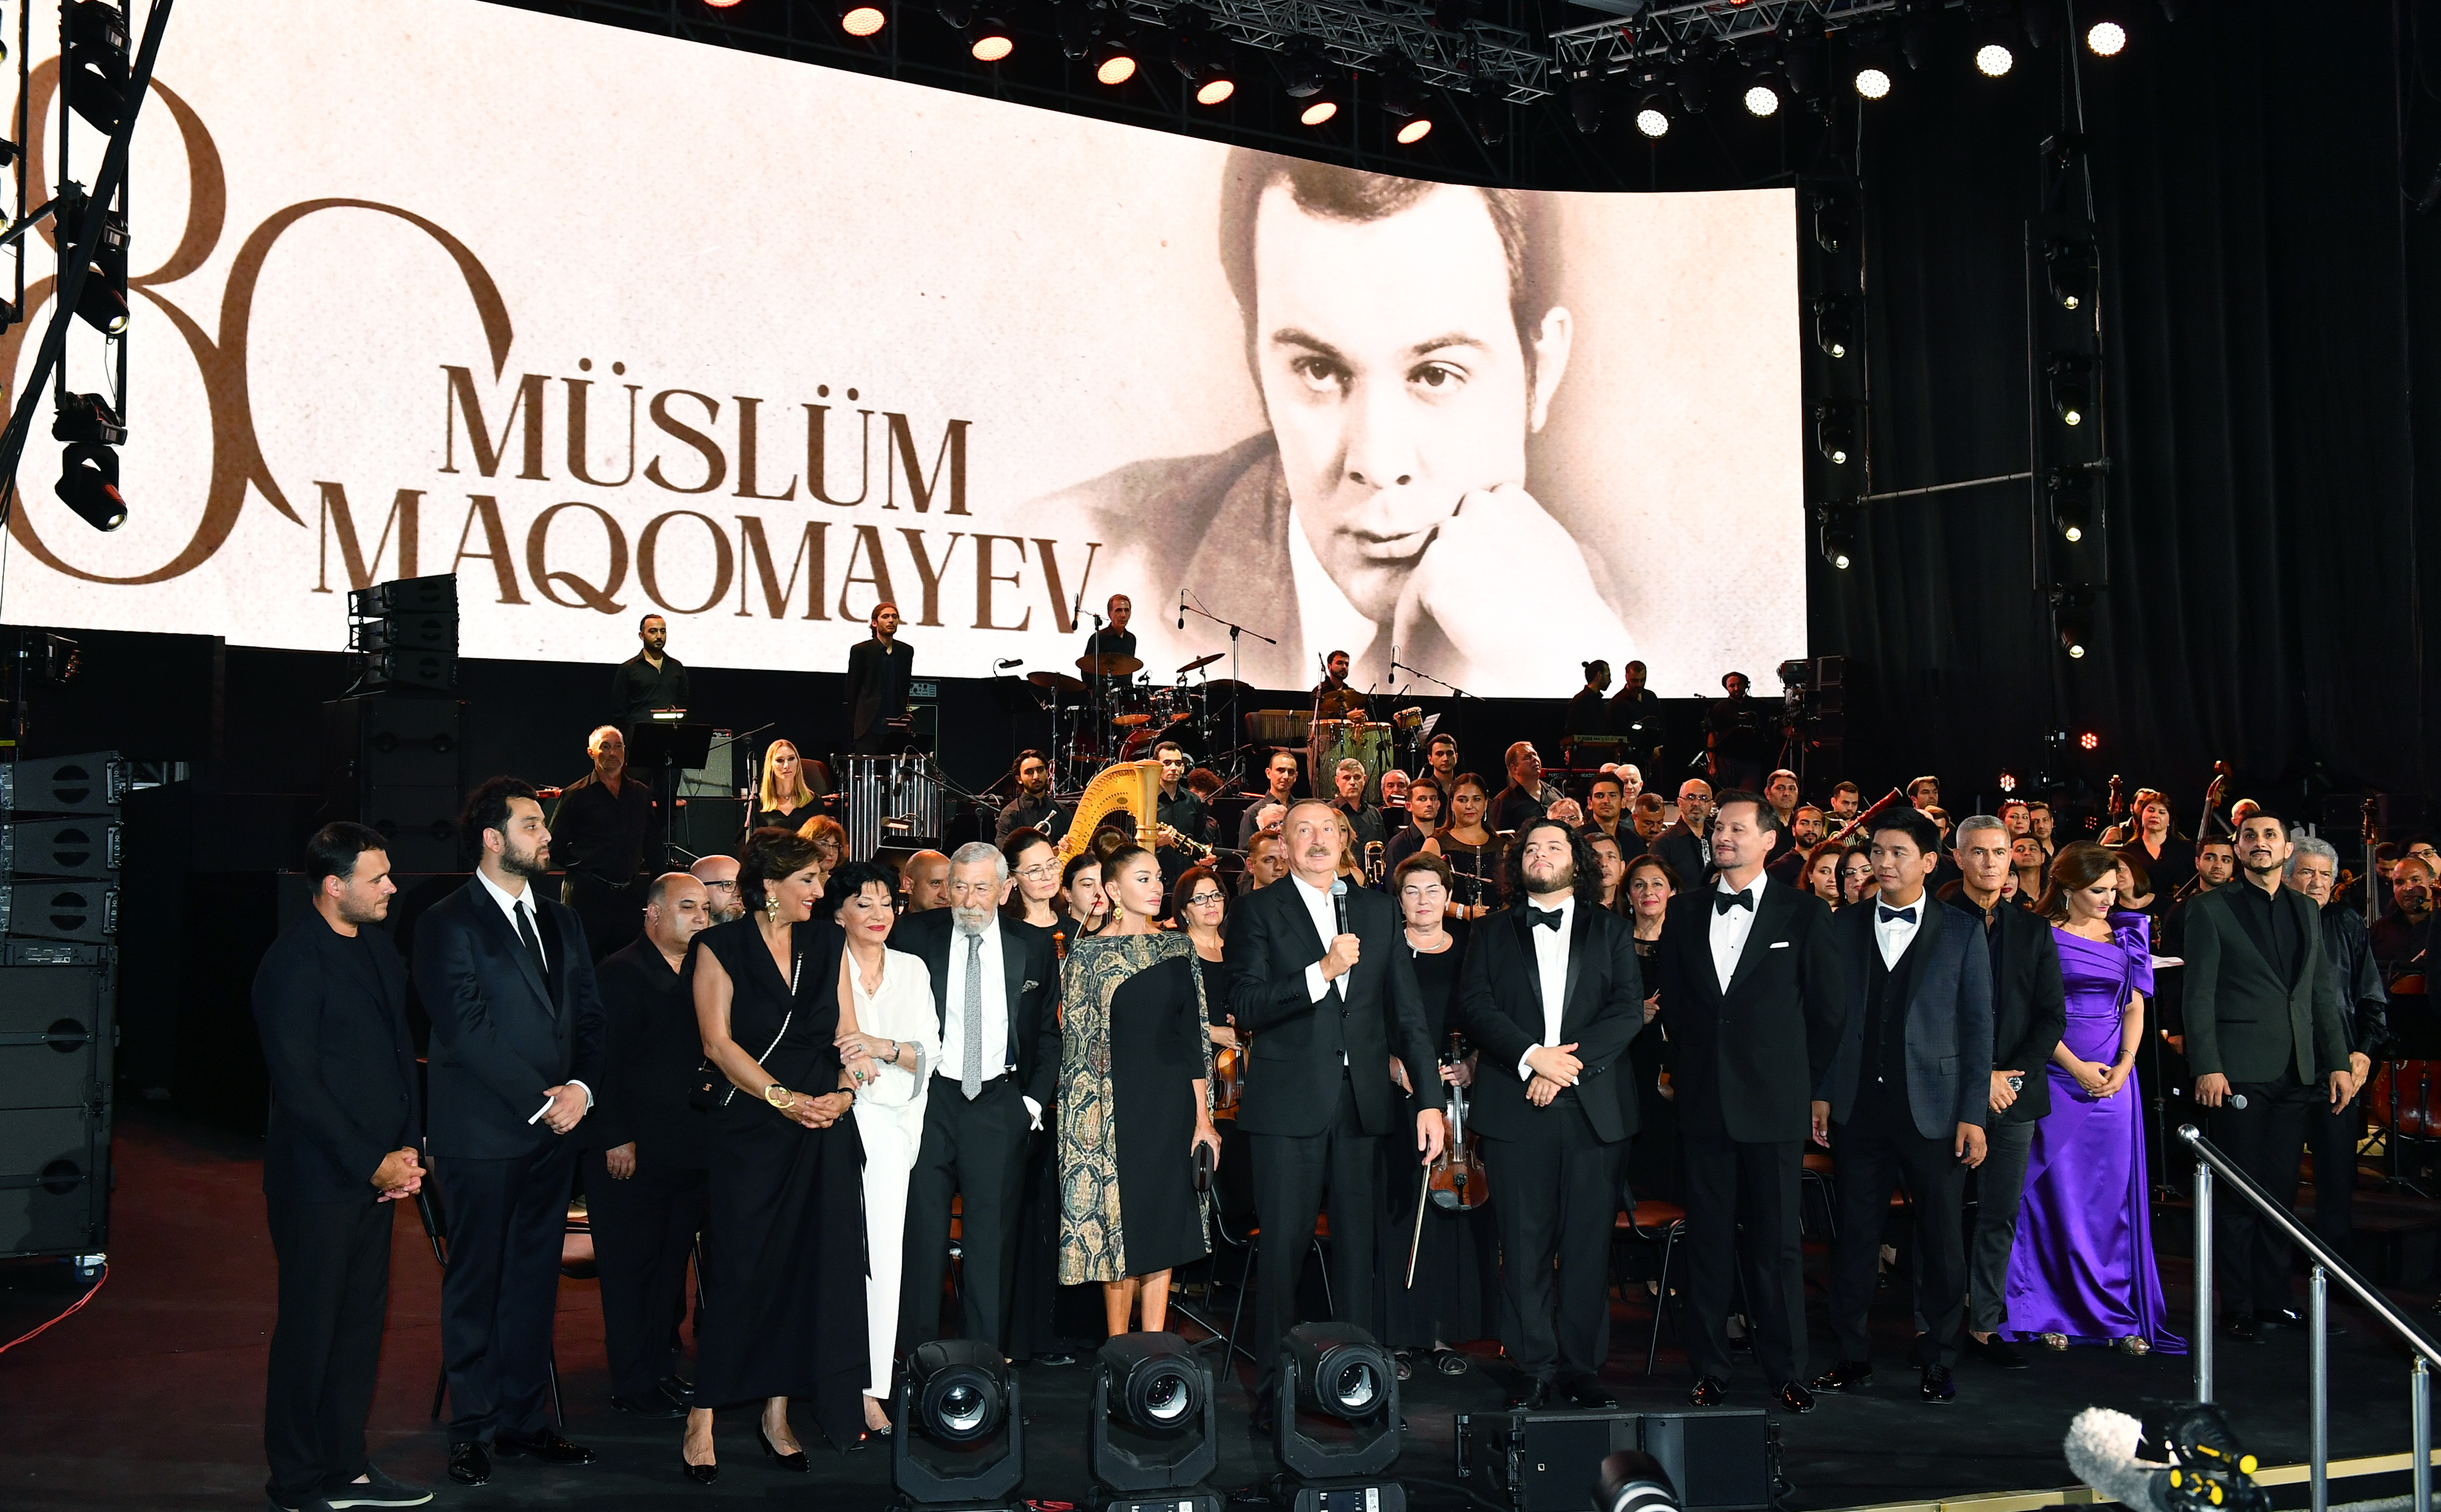 Memorial evening was organized by Heydar Aliyev Foundation for world-famous singer Muslum Magomayev